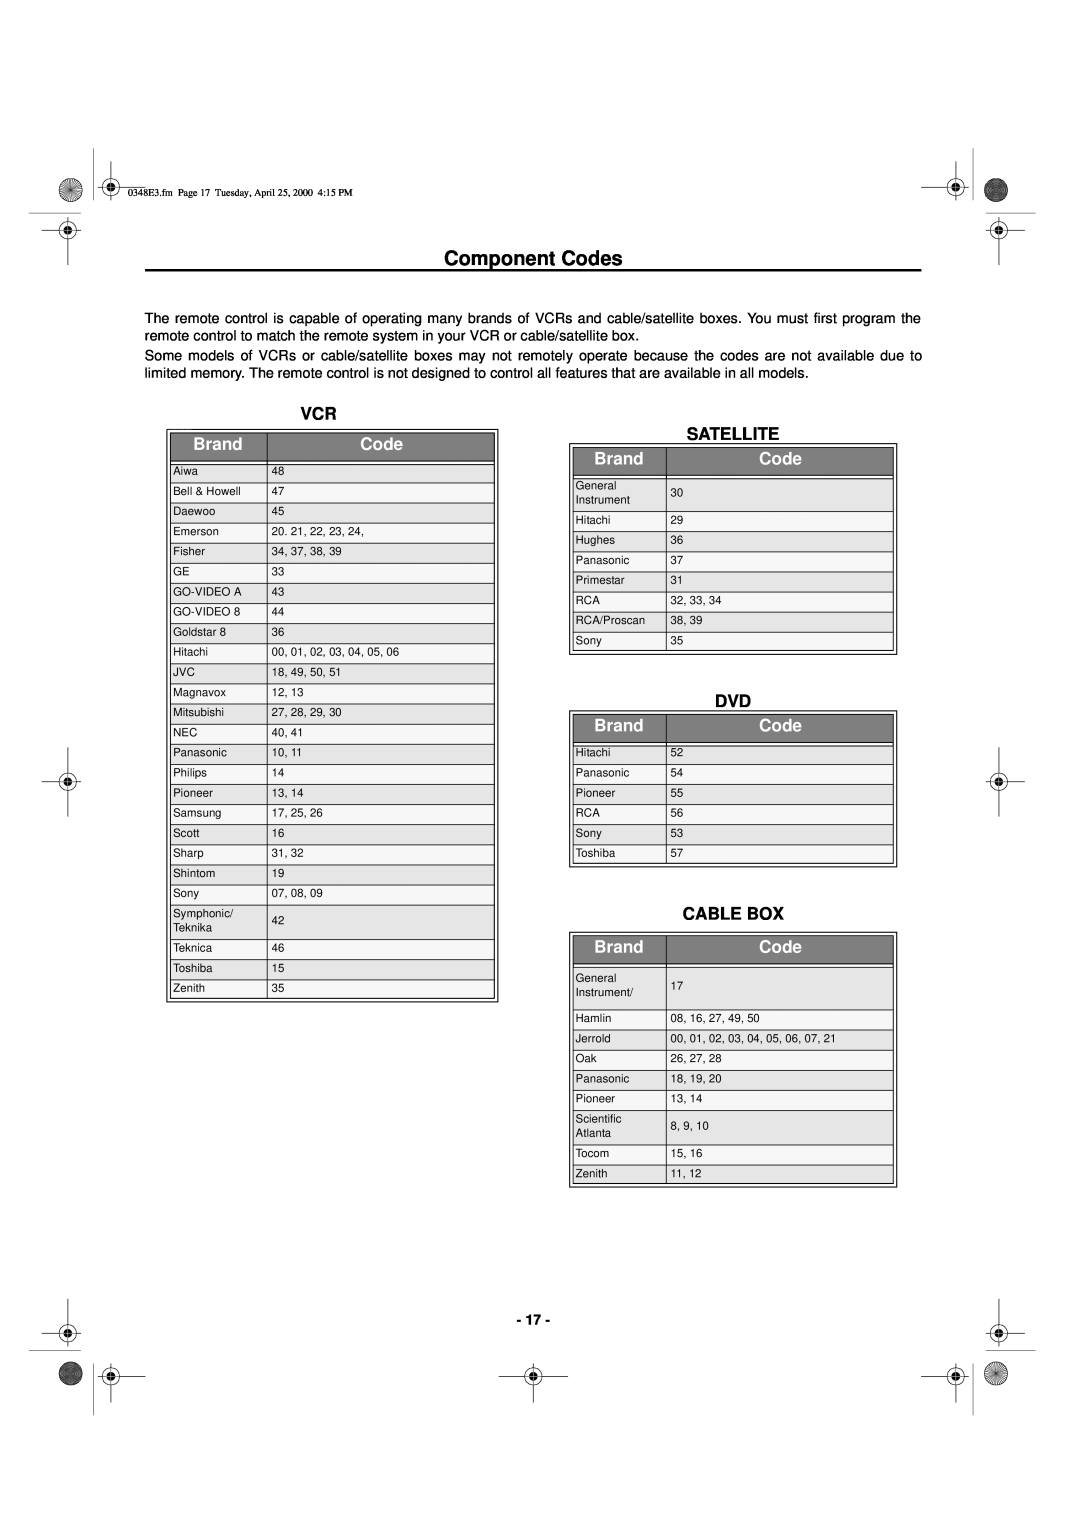 Hitachi 27UX01B manual Brand, Code, Satellite, Cable Box 